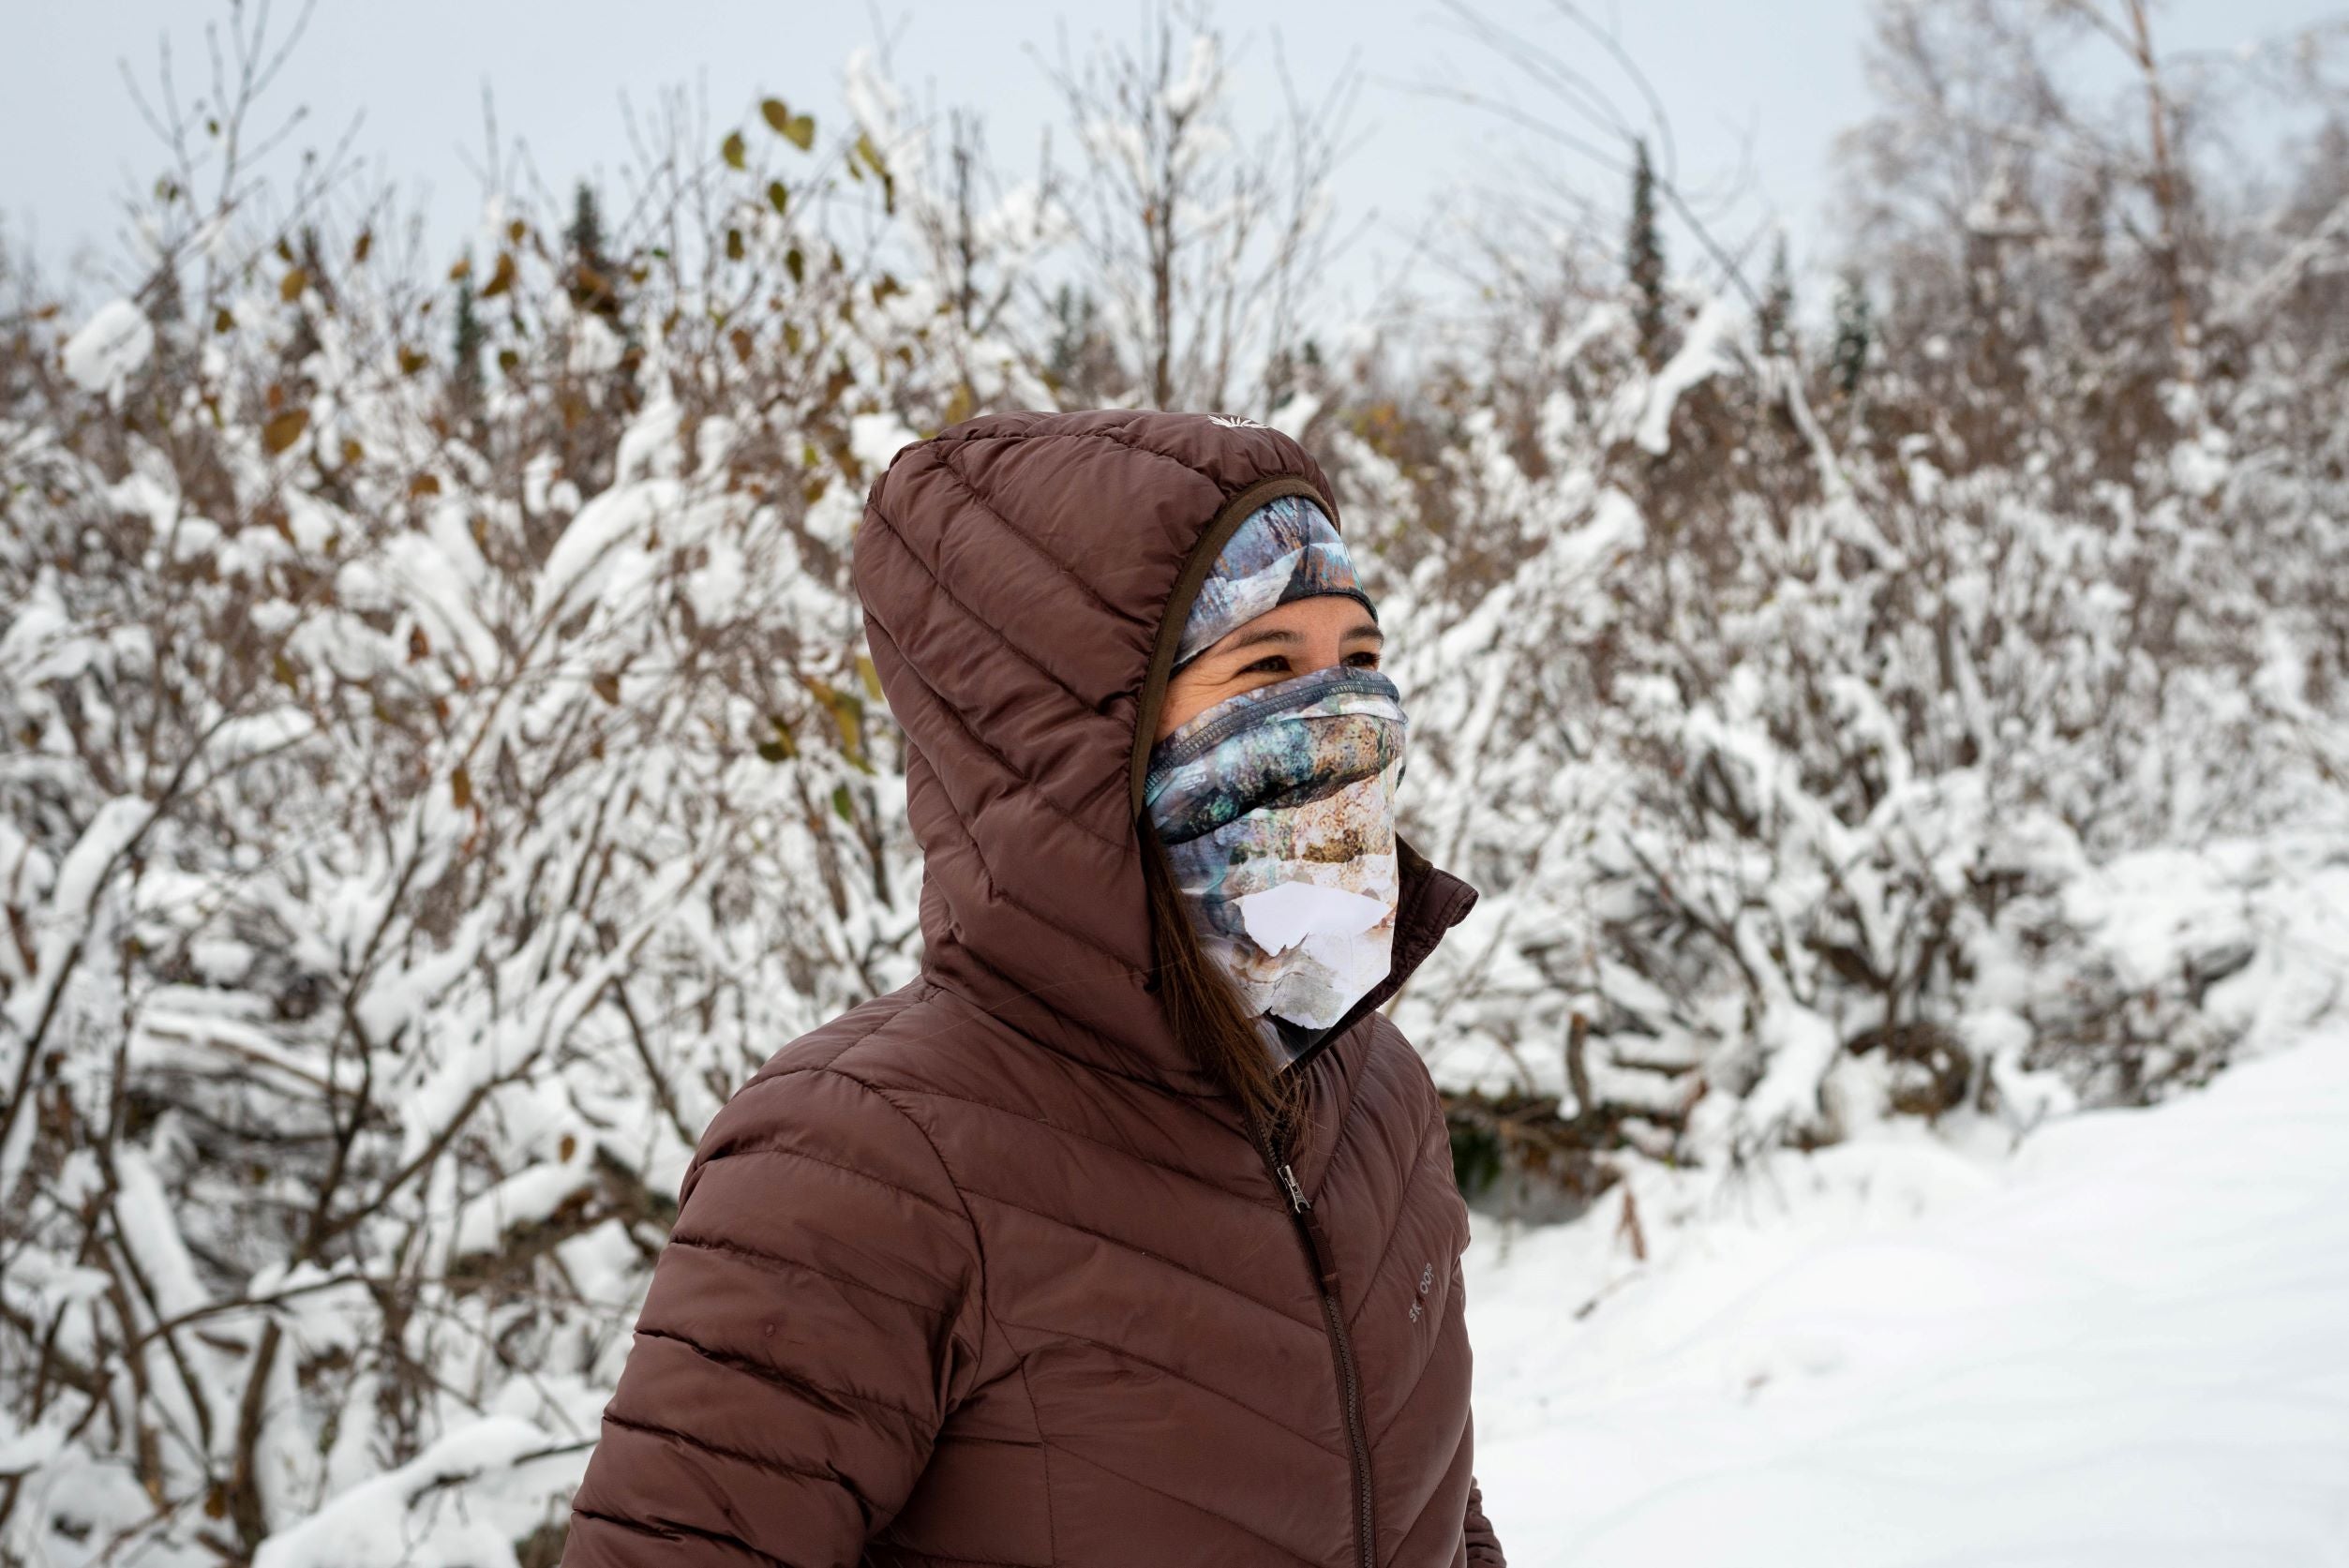 alpine fit merino wool headband in winter outside with neck gaiter